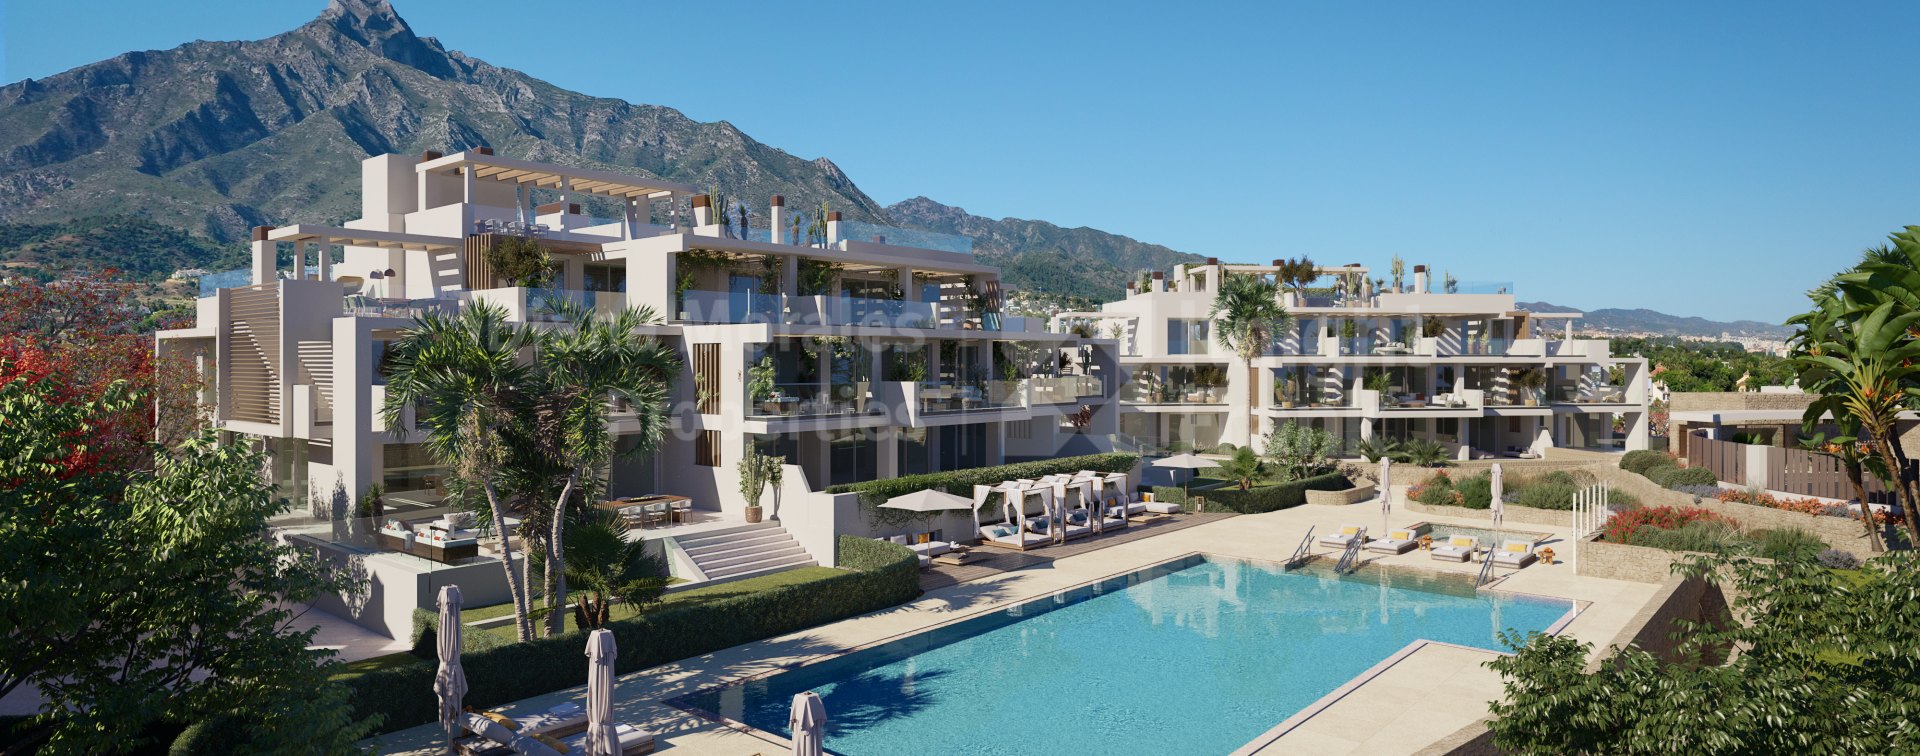 Earth Golden Mile Residences, Earth, Apartmentkomplex an der Goldenen Meile von Marbella